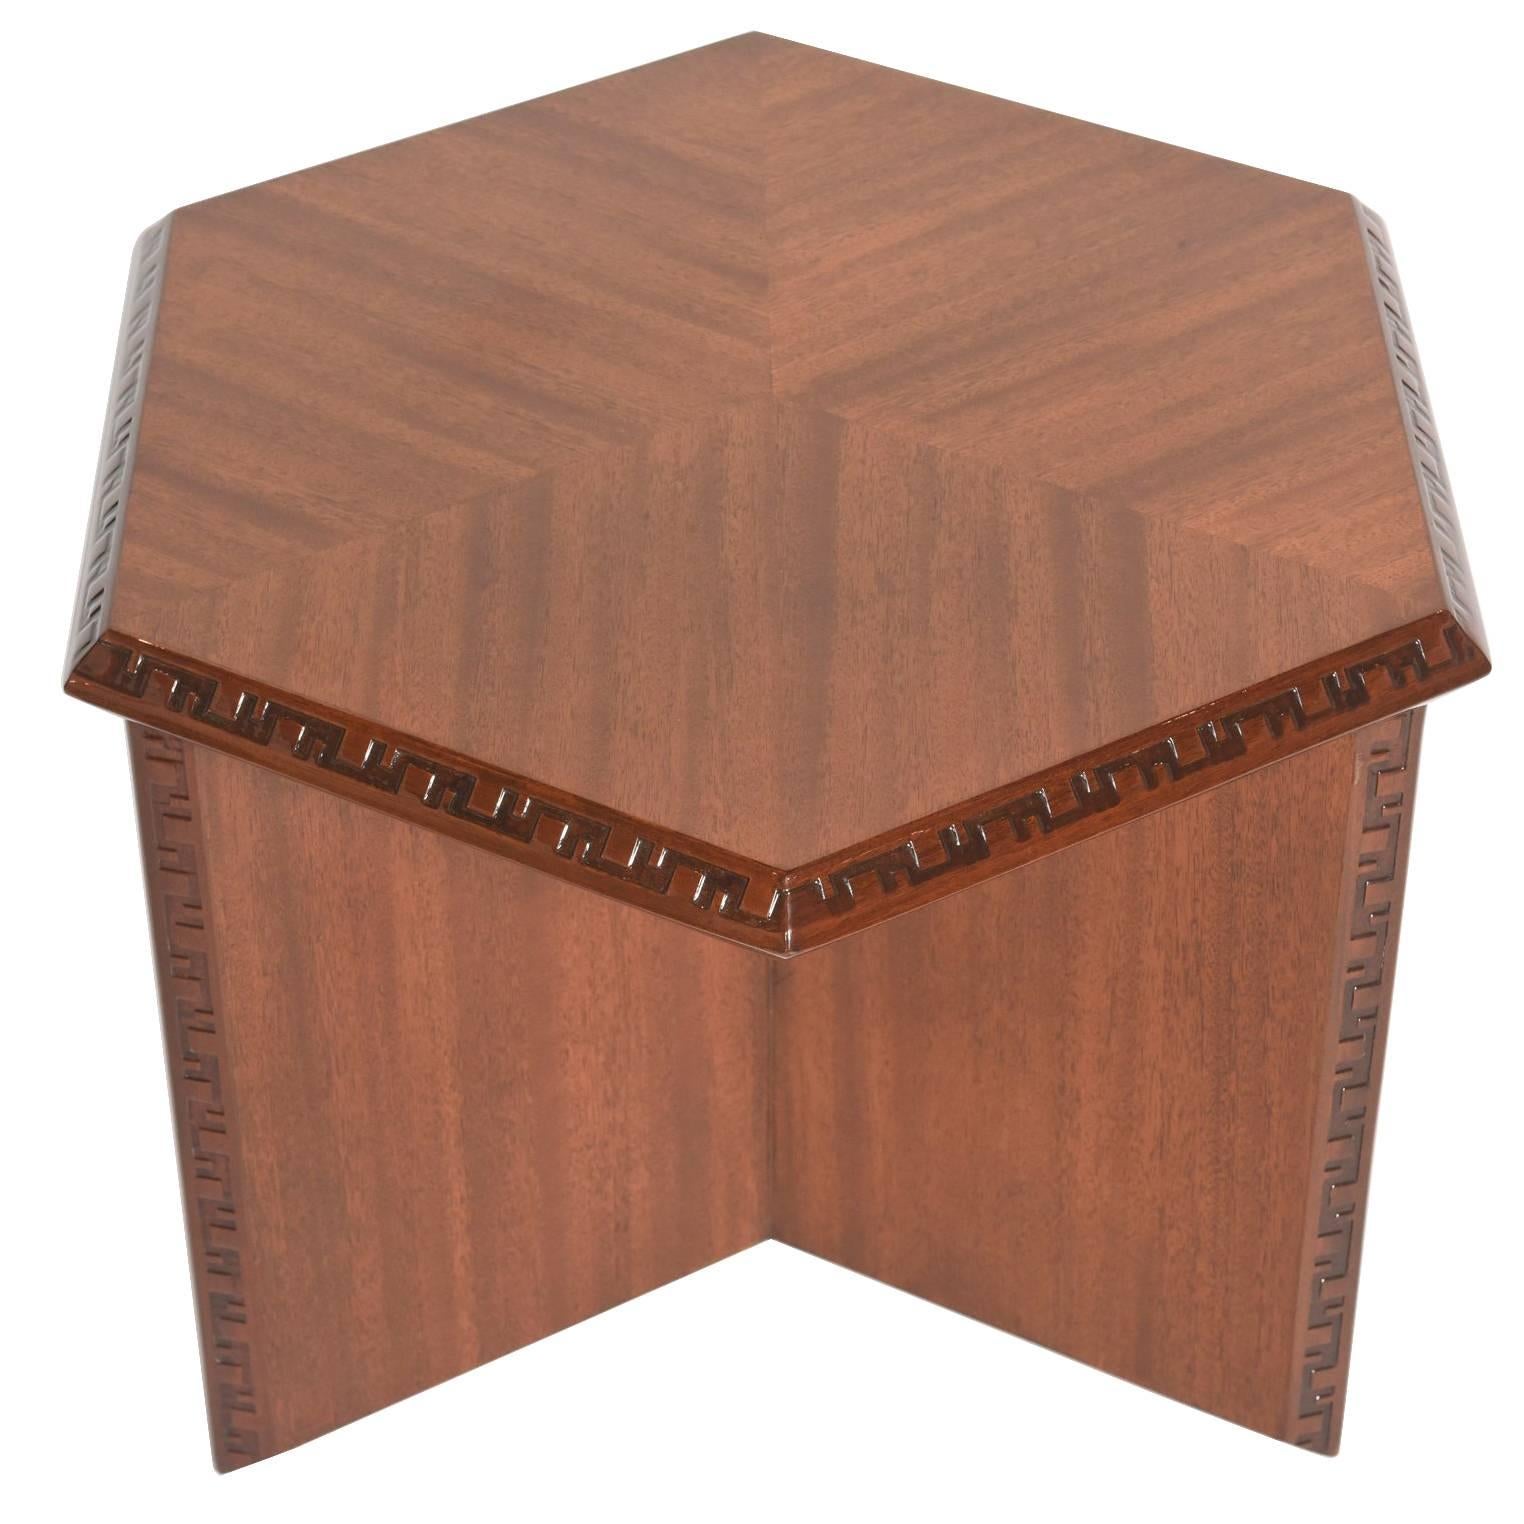 American Modern "Taliesin" Hexagonal Low Table, Frank Lloyd Wright